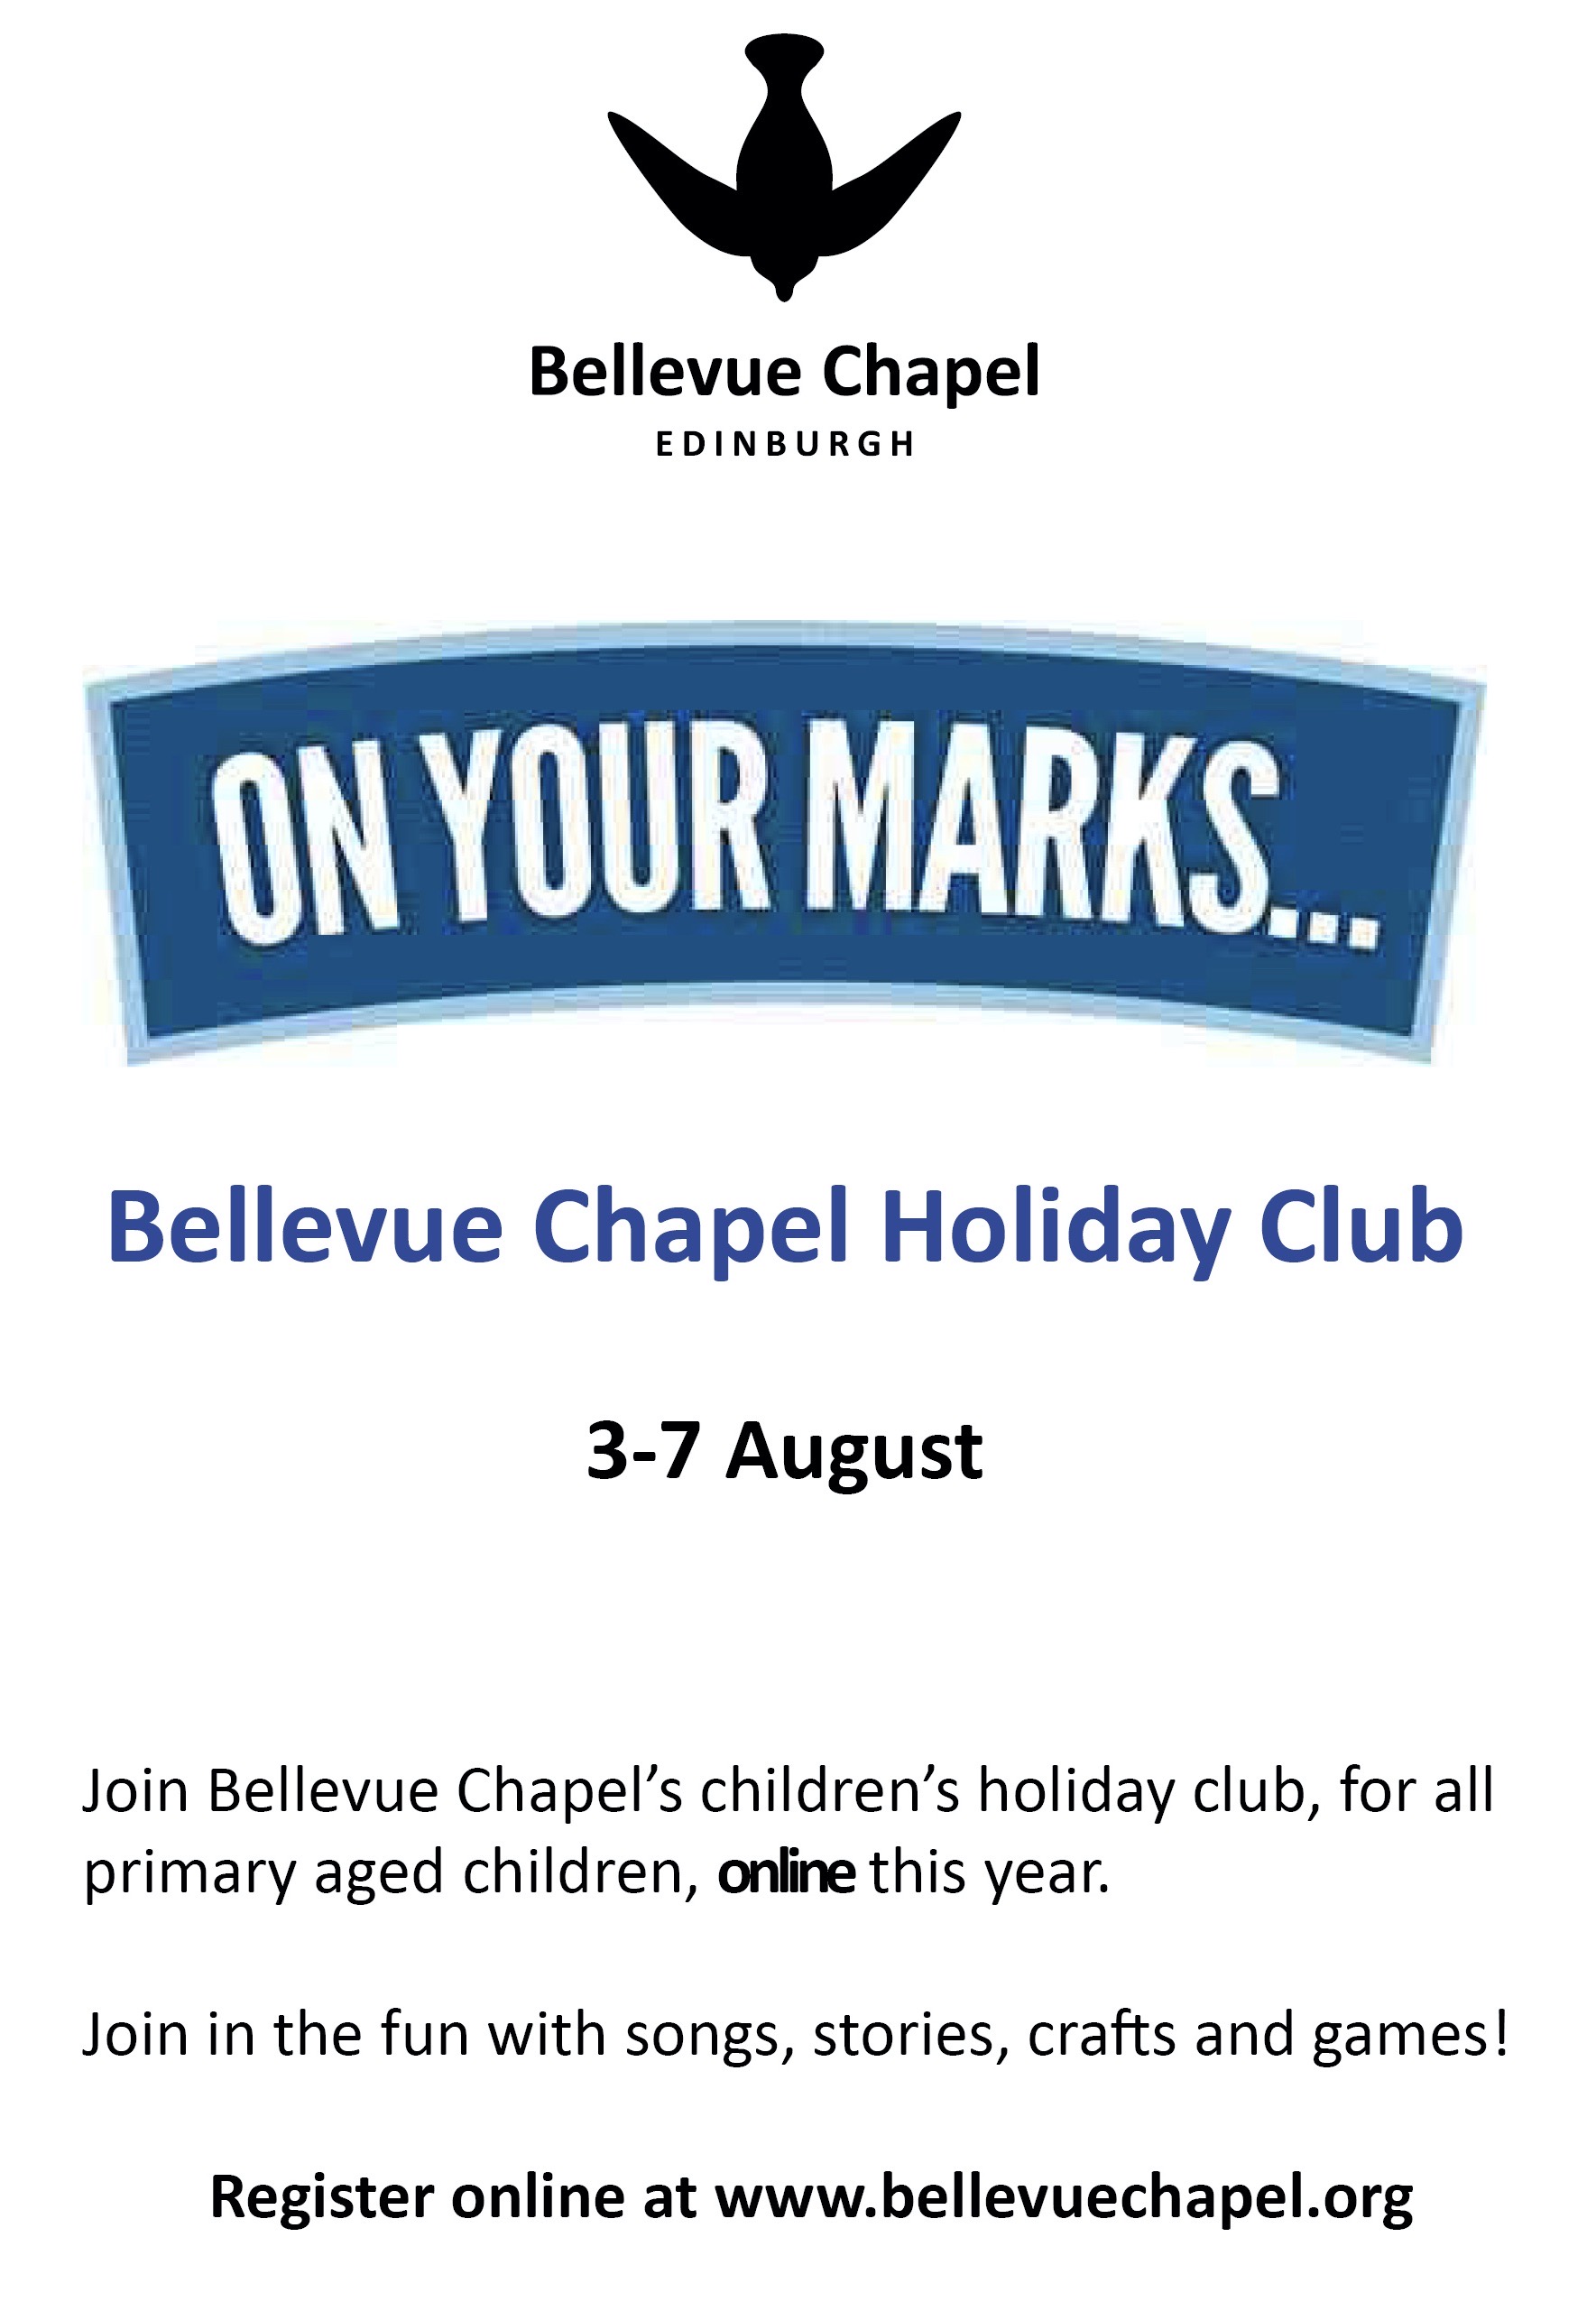 Bellevue Chapel holiday club advert